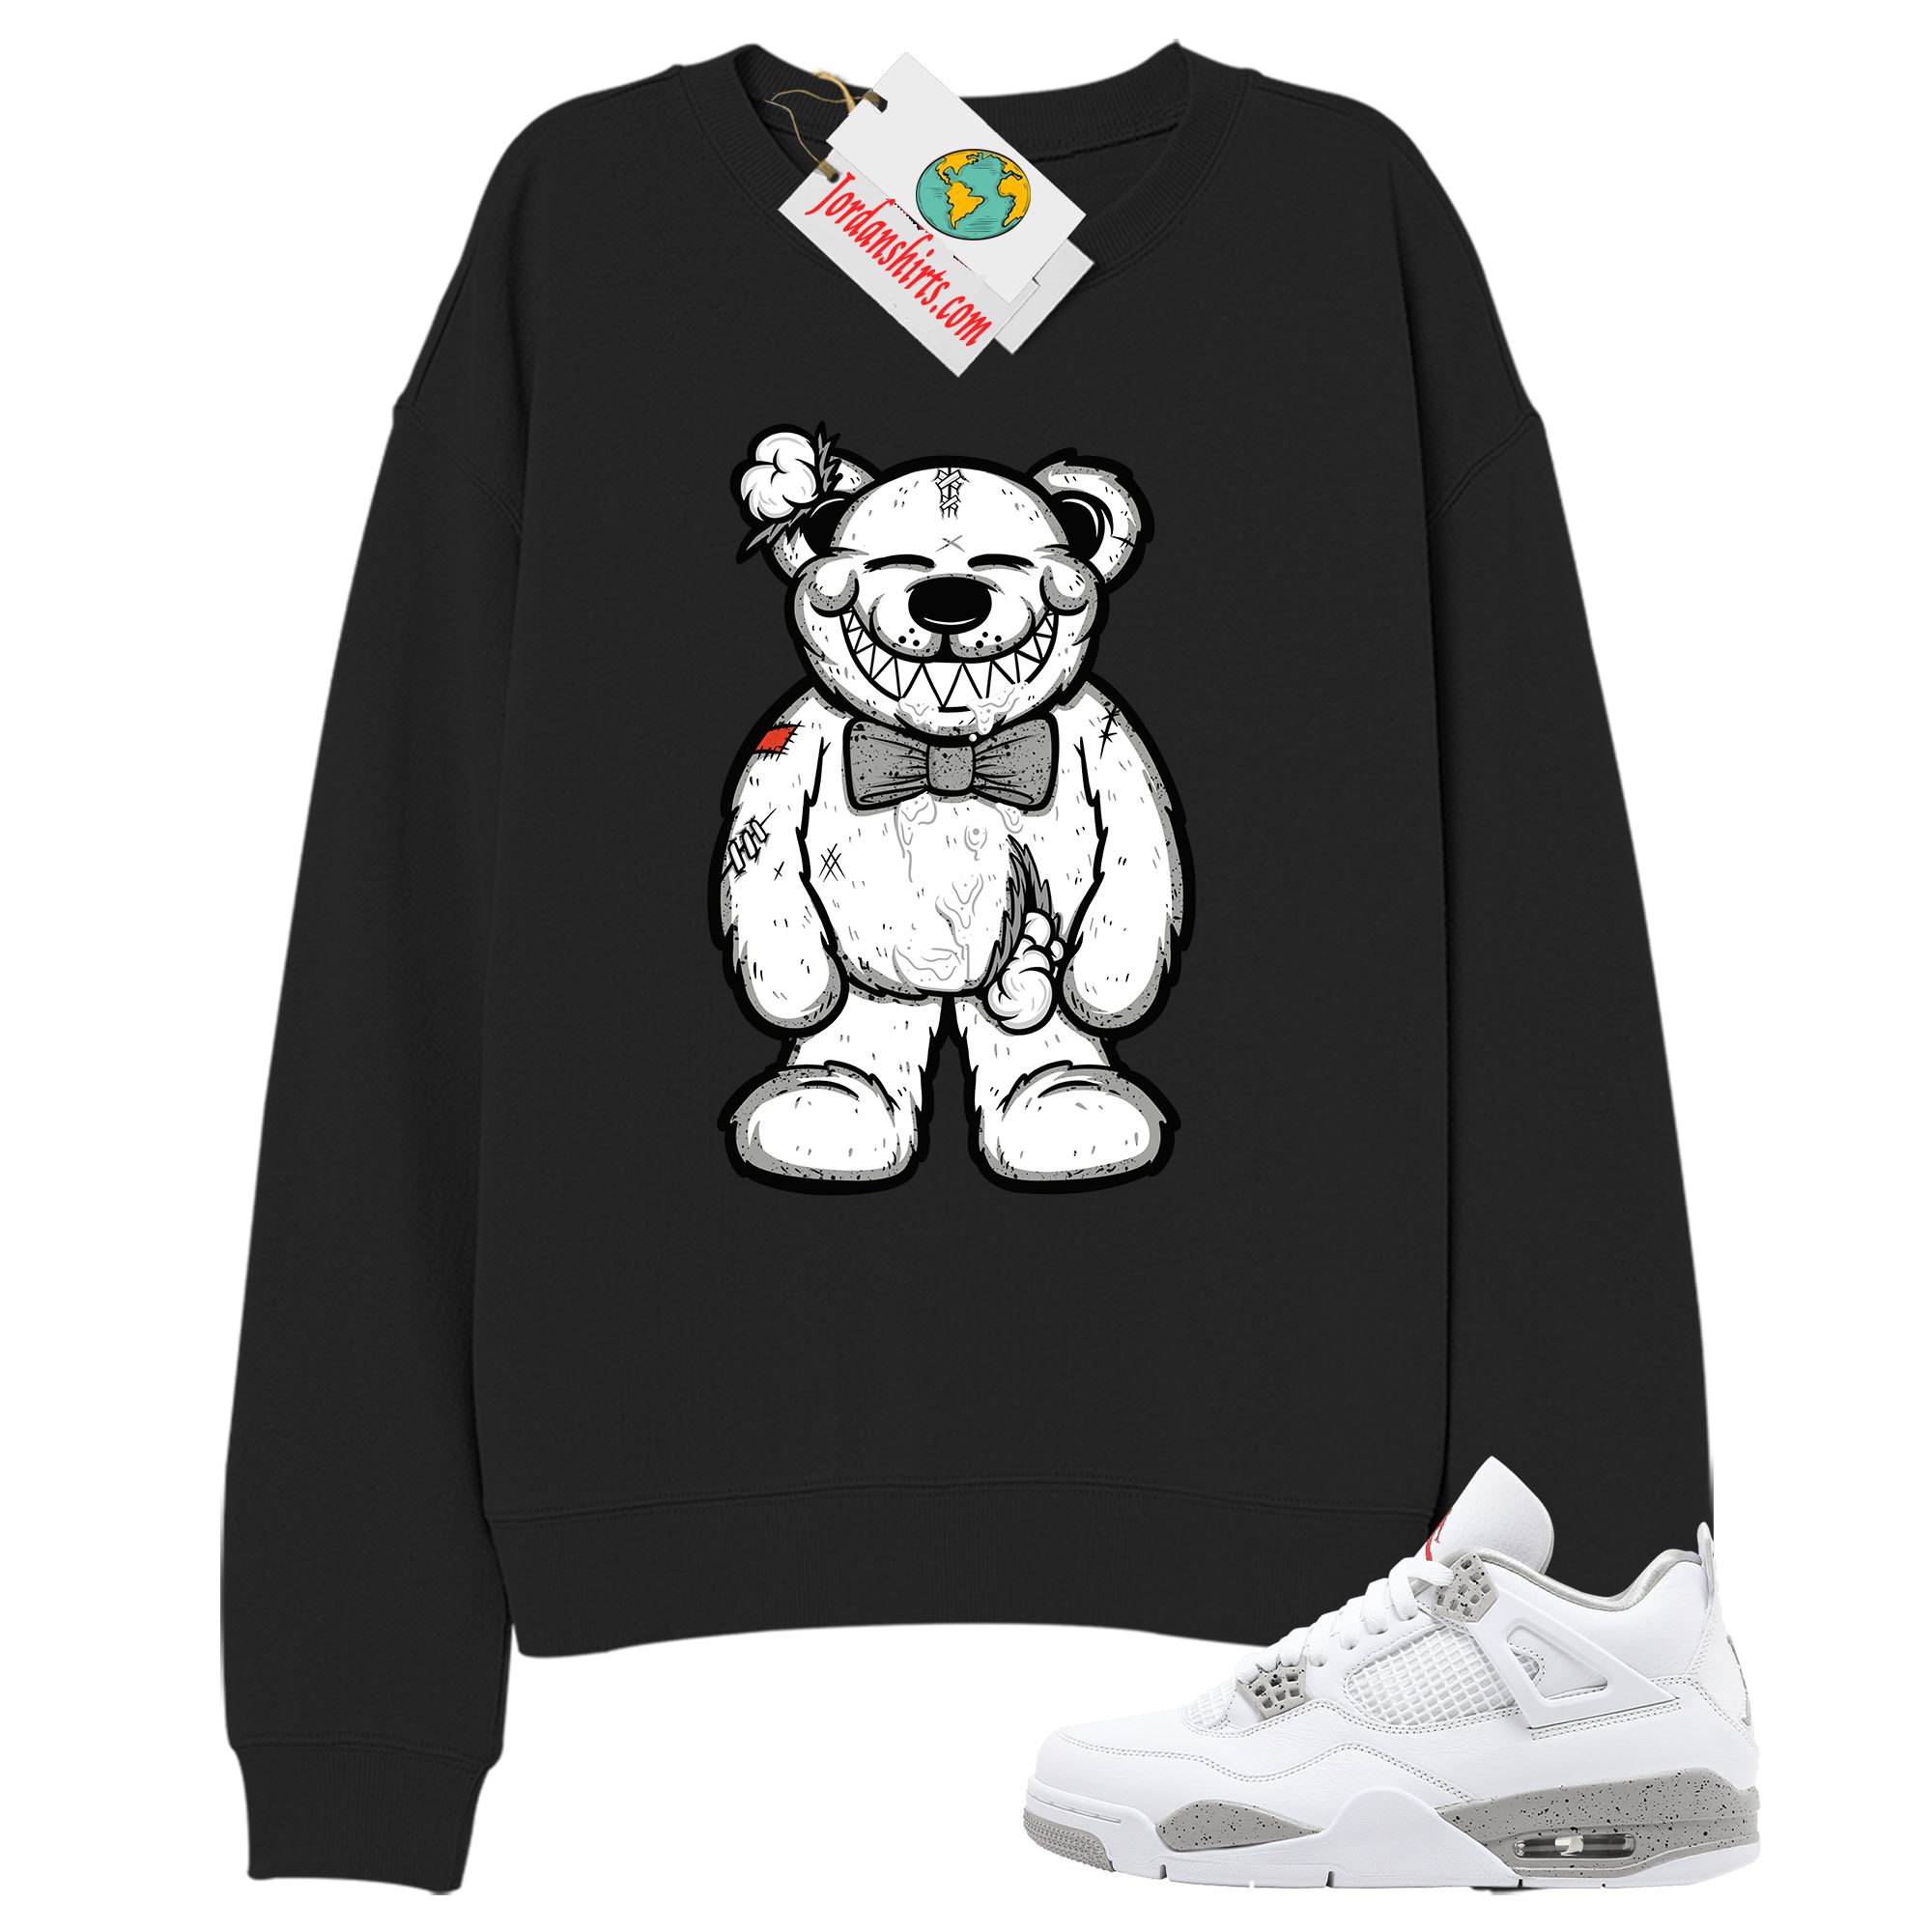 Jordan 4 Sweatshirt, Teddy Bear Smile Black Sweatshirt Air Jordan 4 White Oreo 4s Size Up To 5xl